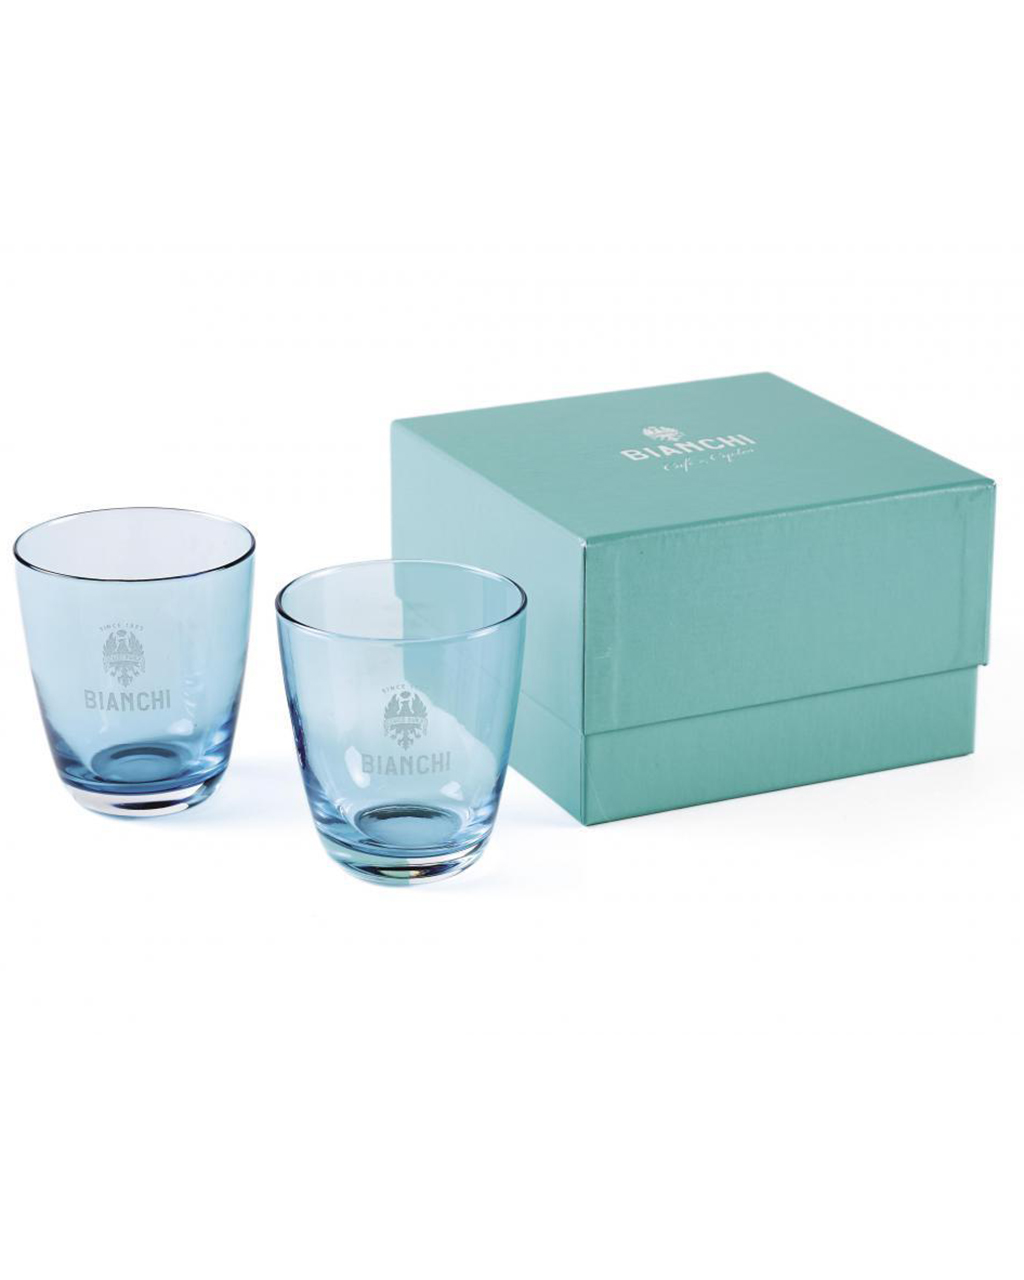 Bianchi Water Glasses set of 2 Blue